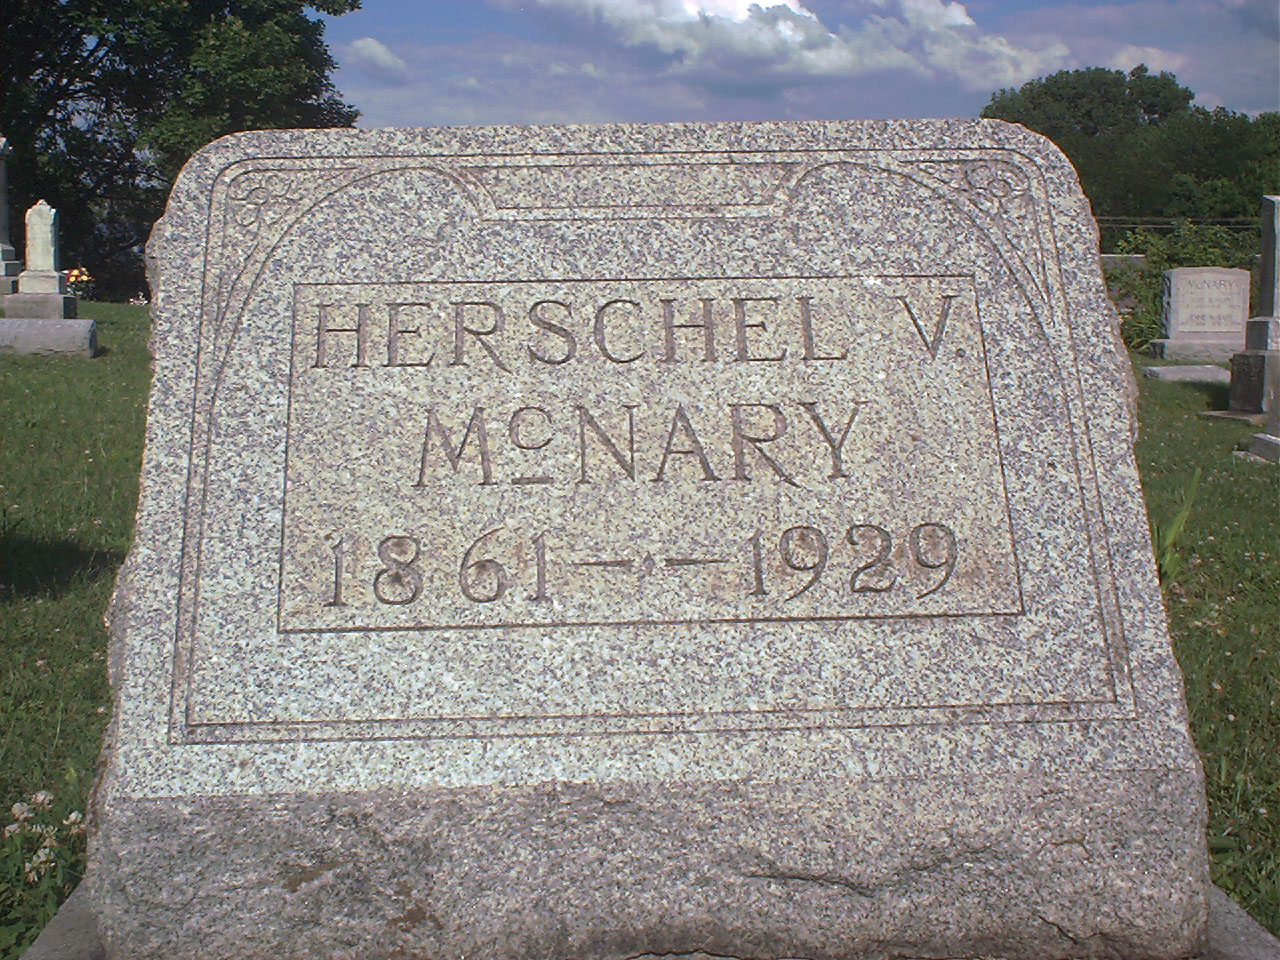 Herschel V. McNary headstone